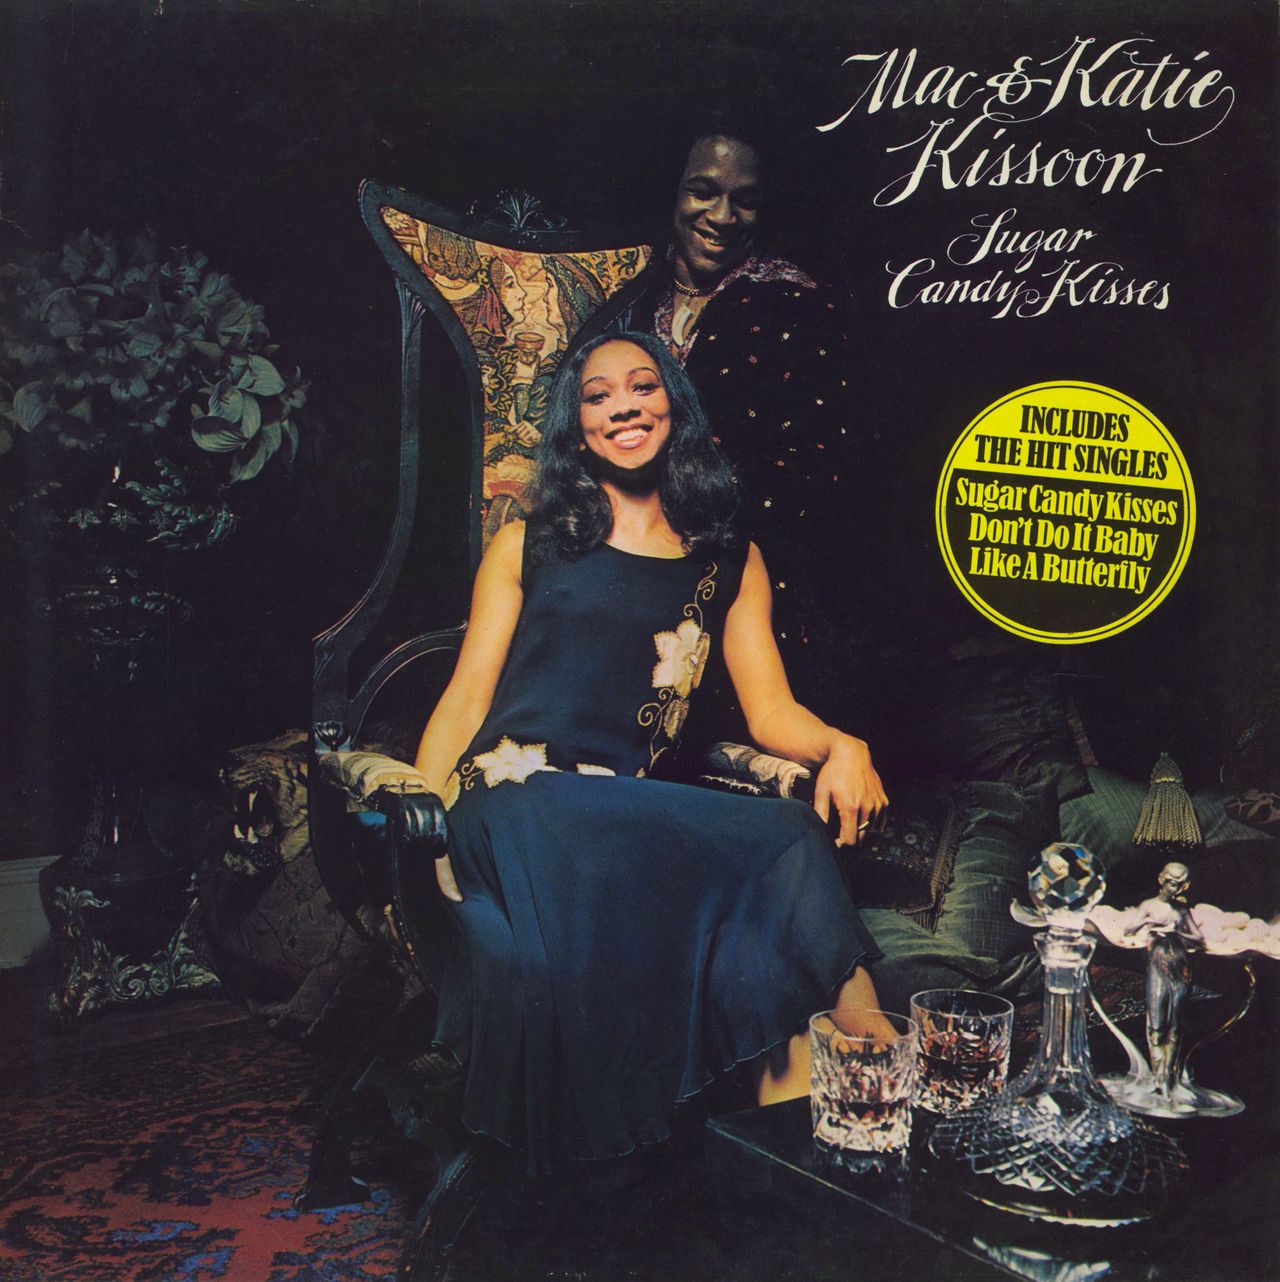 Mac & Katie Kissoon Sugar Candy Kisses - Stickered Sleeve UK vinyl LP album (LP record) ETAT002